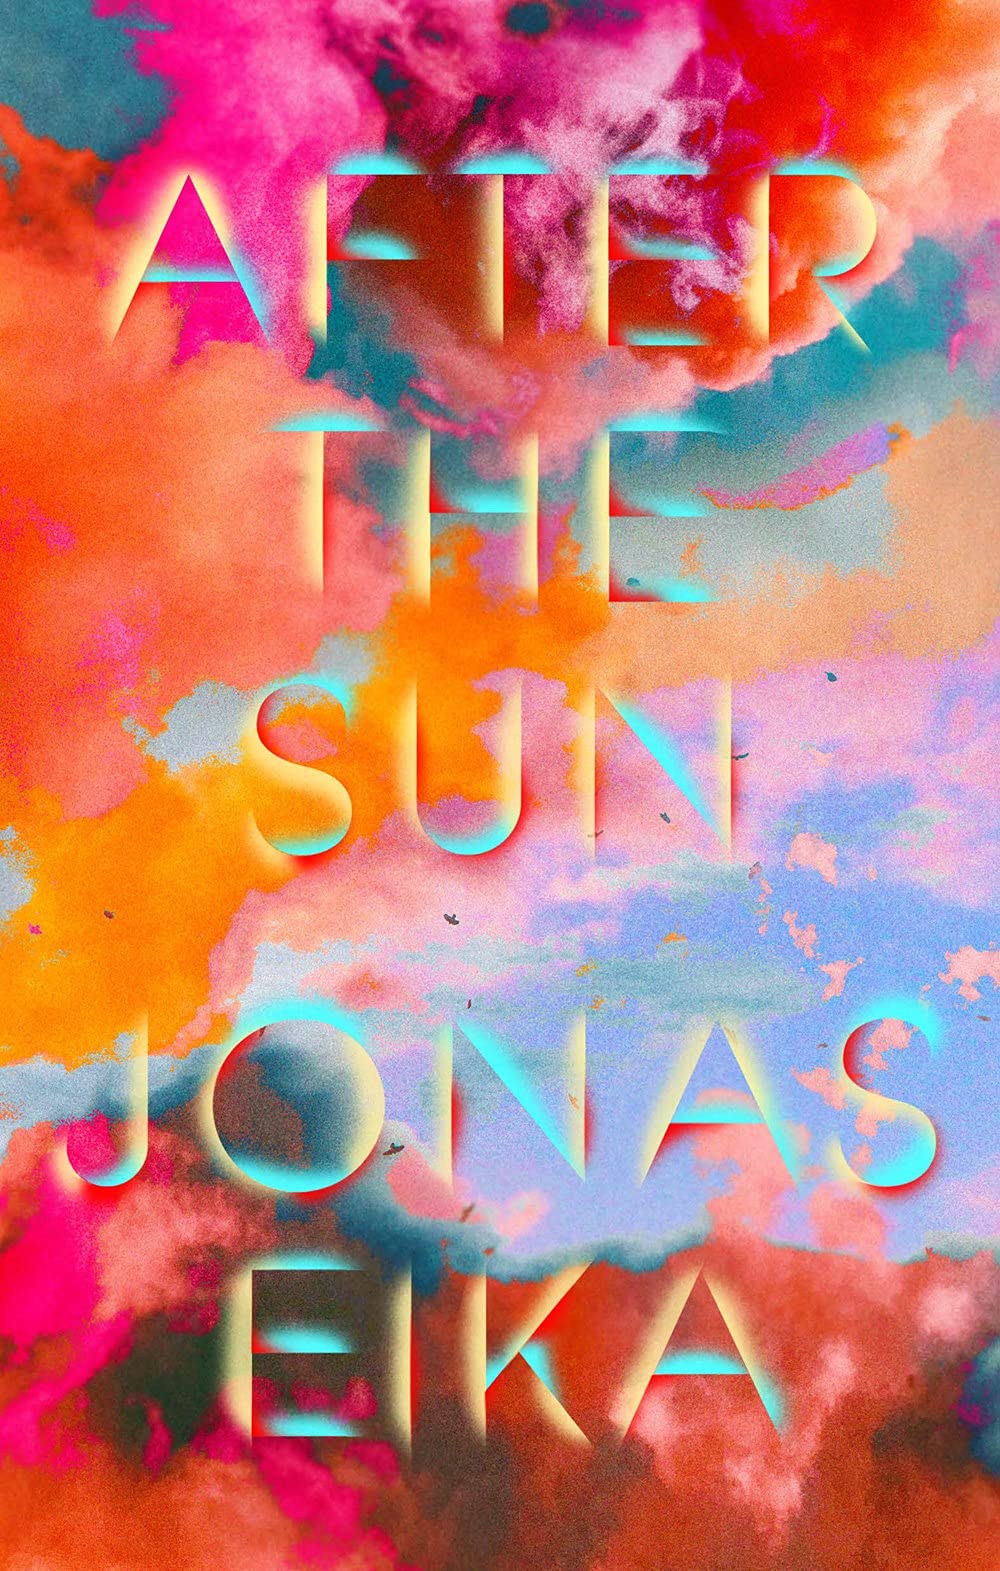 Jonas Eika, <em><a href="https://bookshop.org/a/132/9780593329108" rel="noopener" target="_blank">After the Sun</a></em>; cover design by Lauren Peters-Collaer (Riverhead, August) 